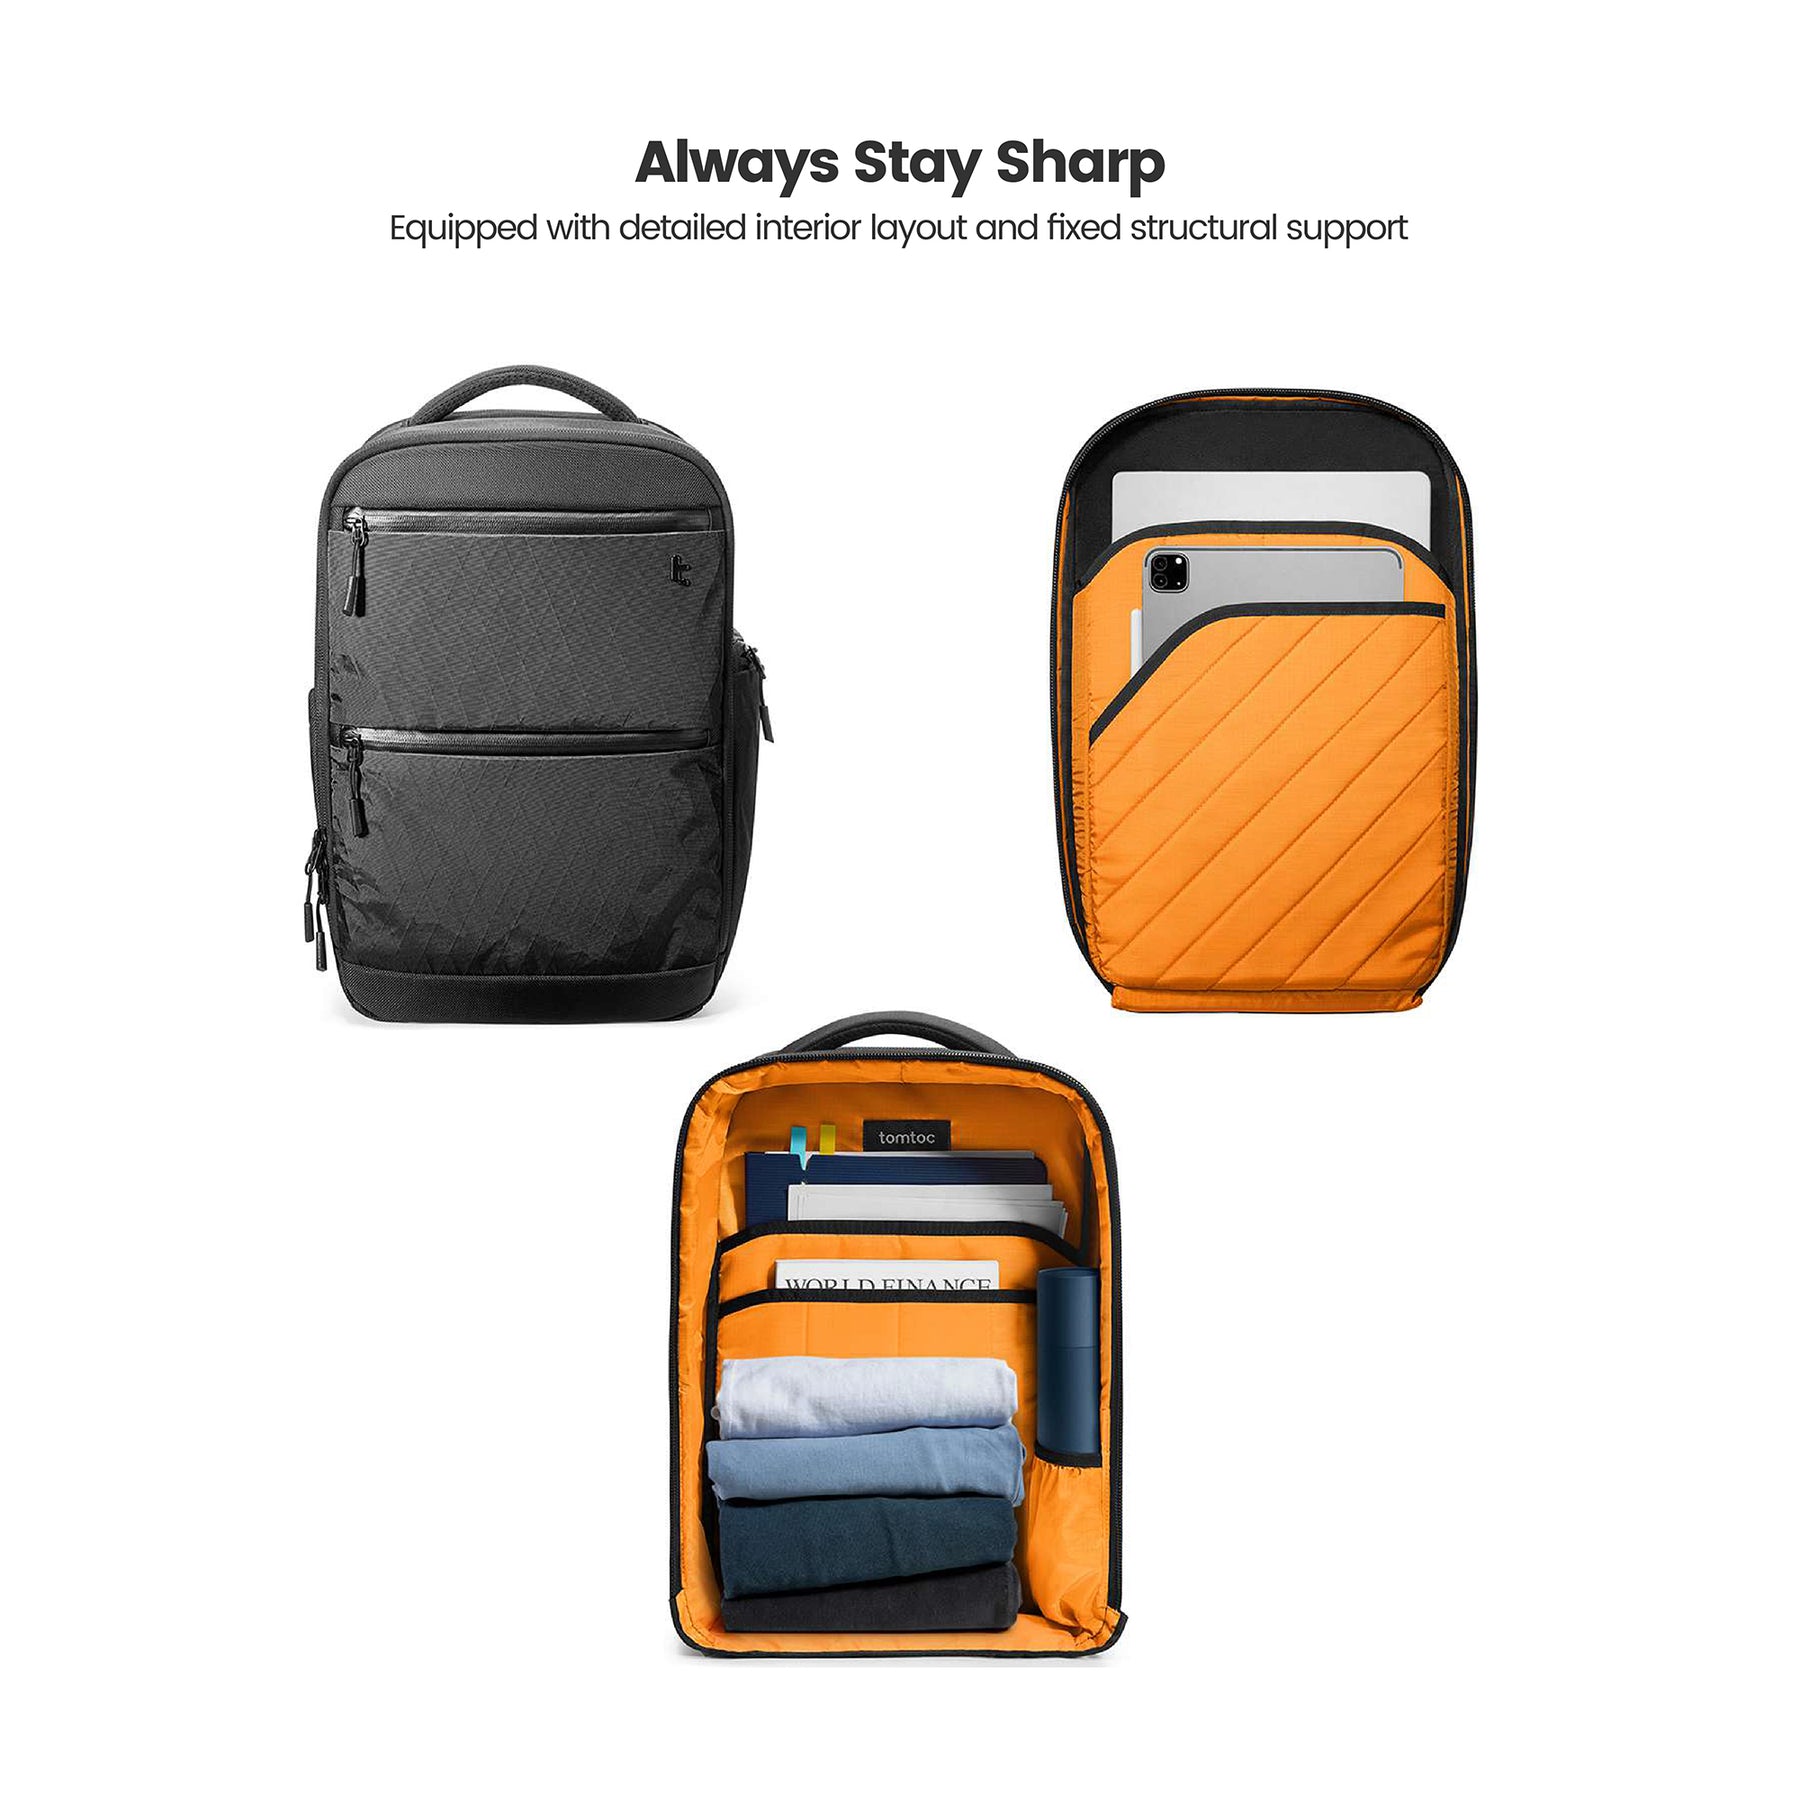 tomtoc 15.6 Inch Premium Urban Laptop Backpack / Travel Backpack - Black